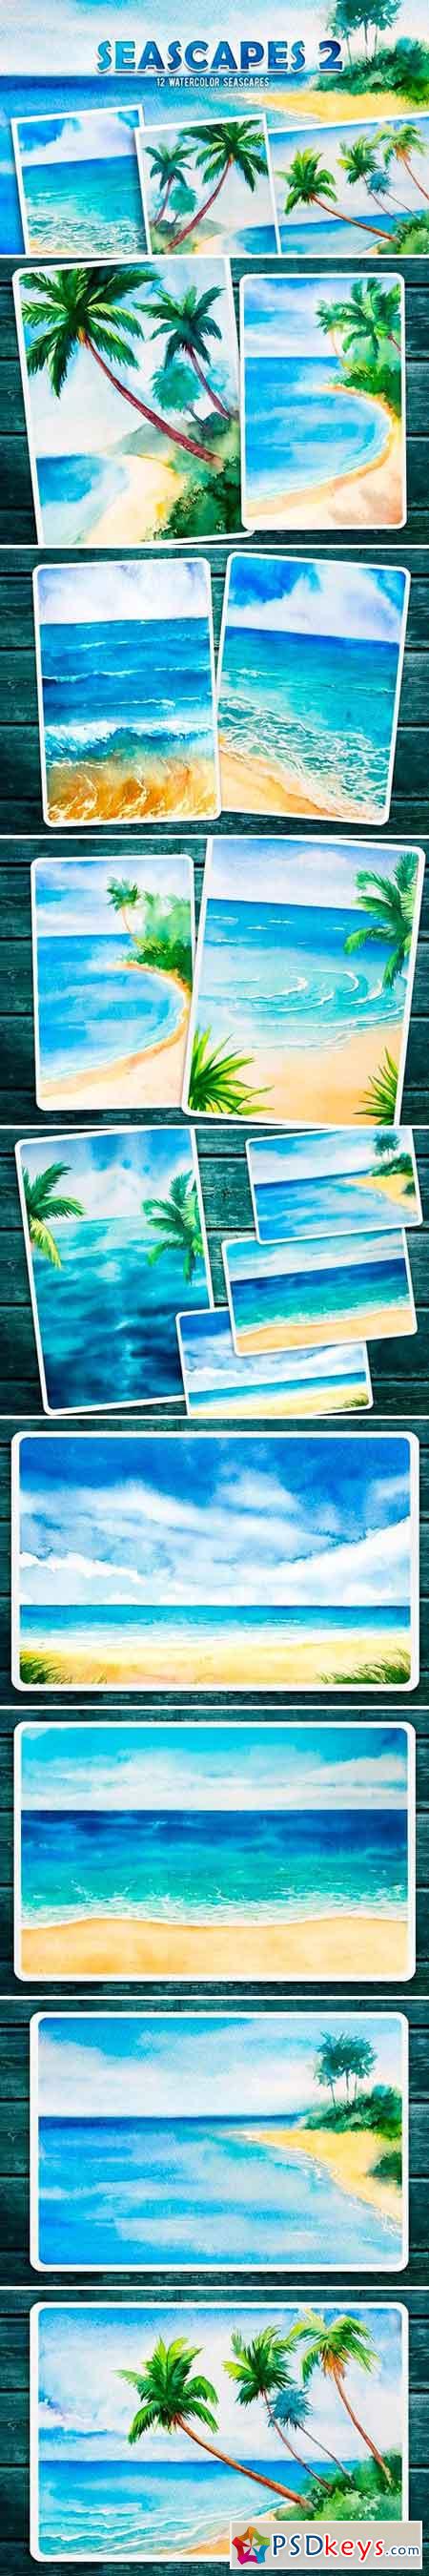 Seascapes 2 Watercolor set 2599076